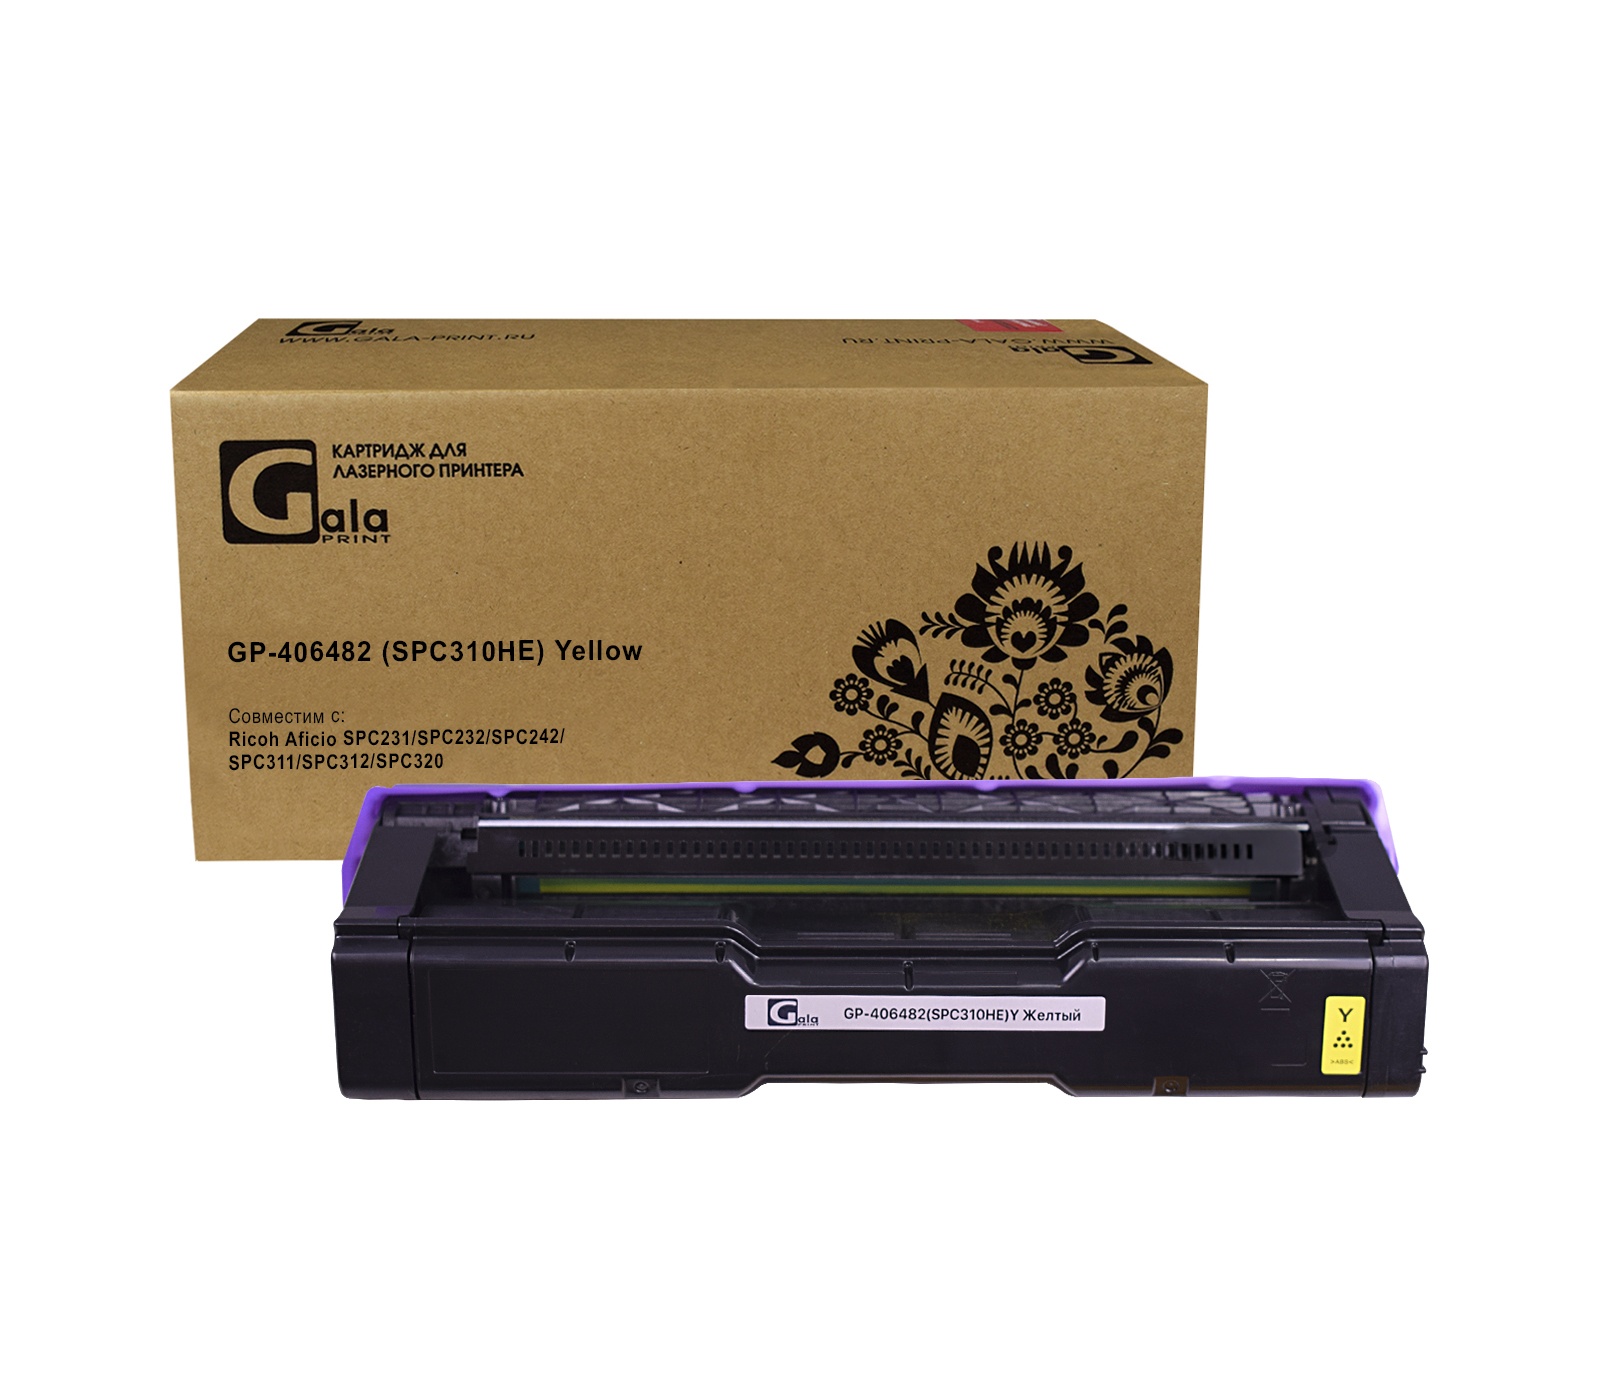 Картридж GP-406482 (SPC310HE) для принтеров Ricoh Aficio SPC231/SPC232/SPC242/SPC312/SPC320 Yellow 6000 копий GalaPrint